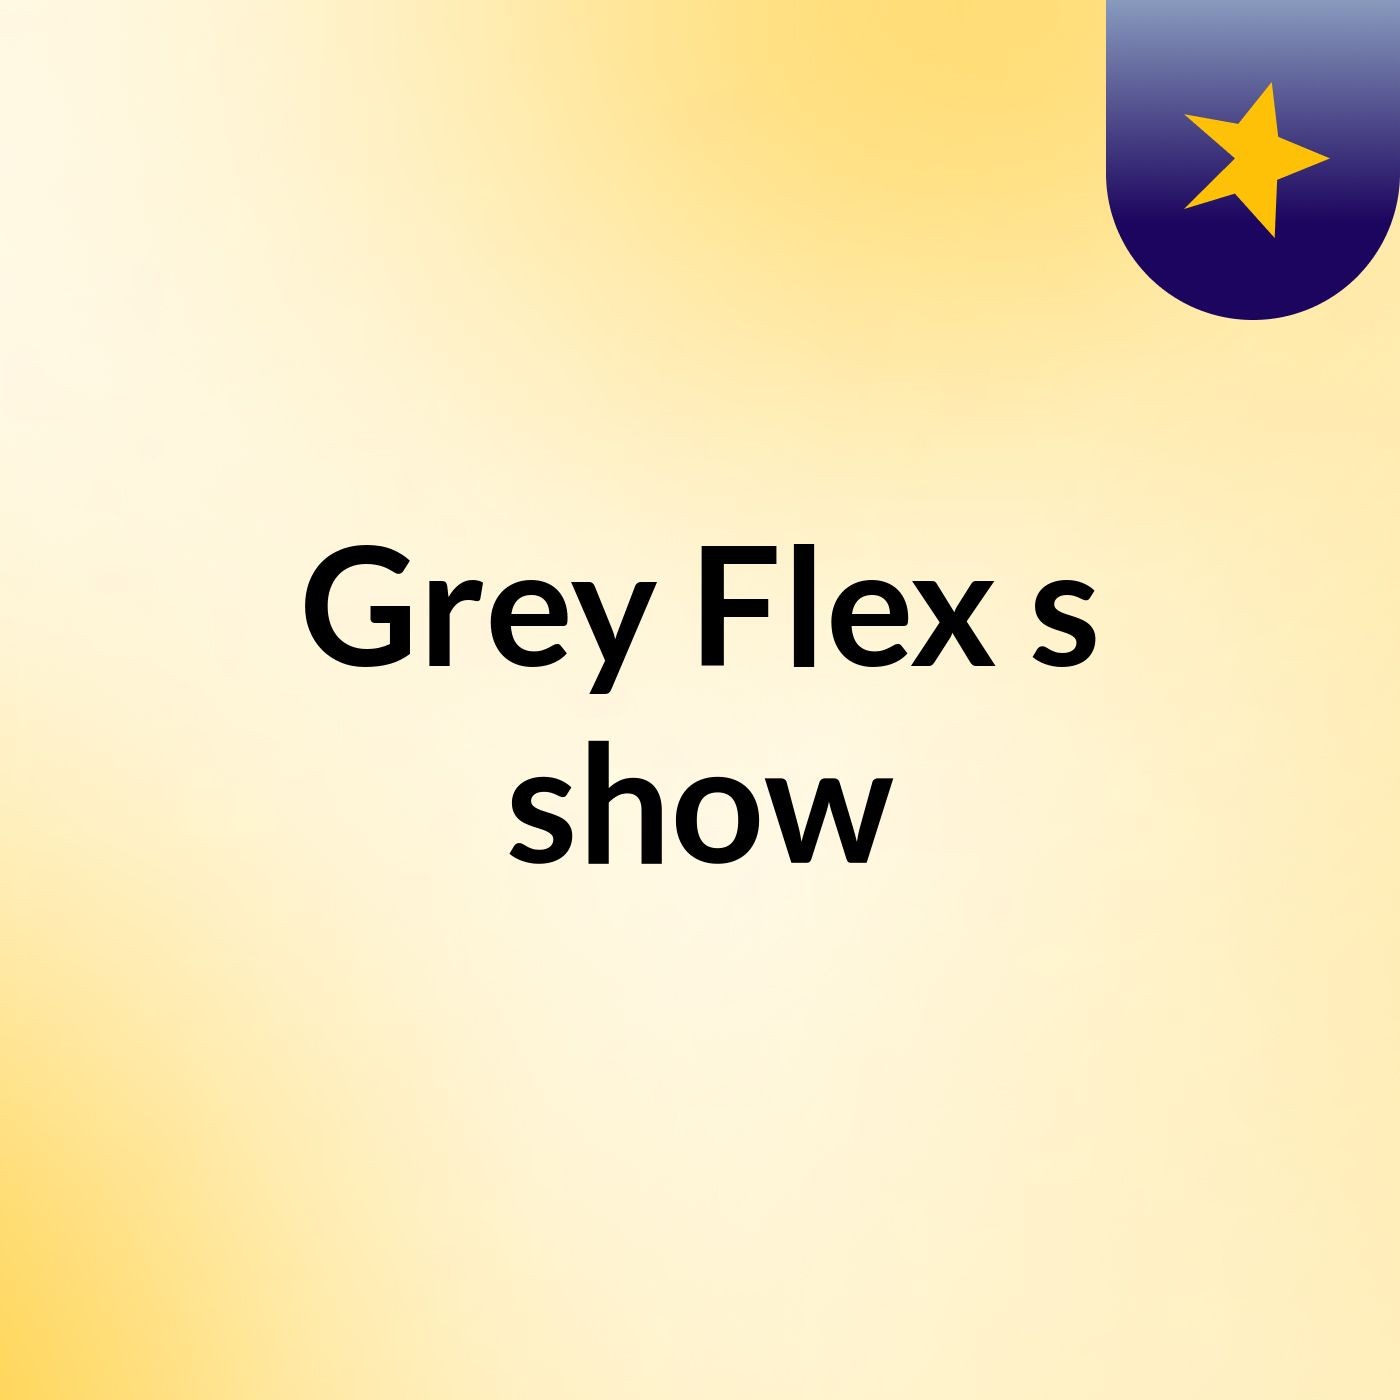 Grey Flex's show